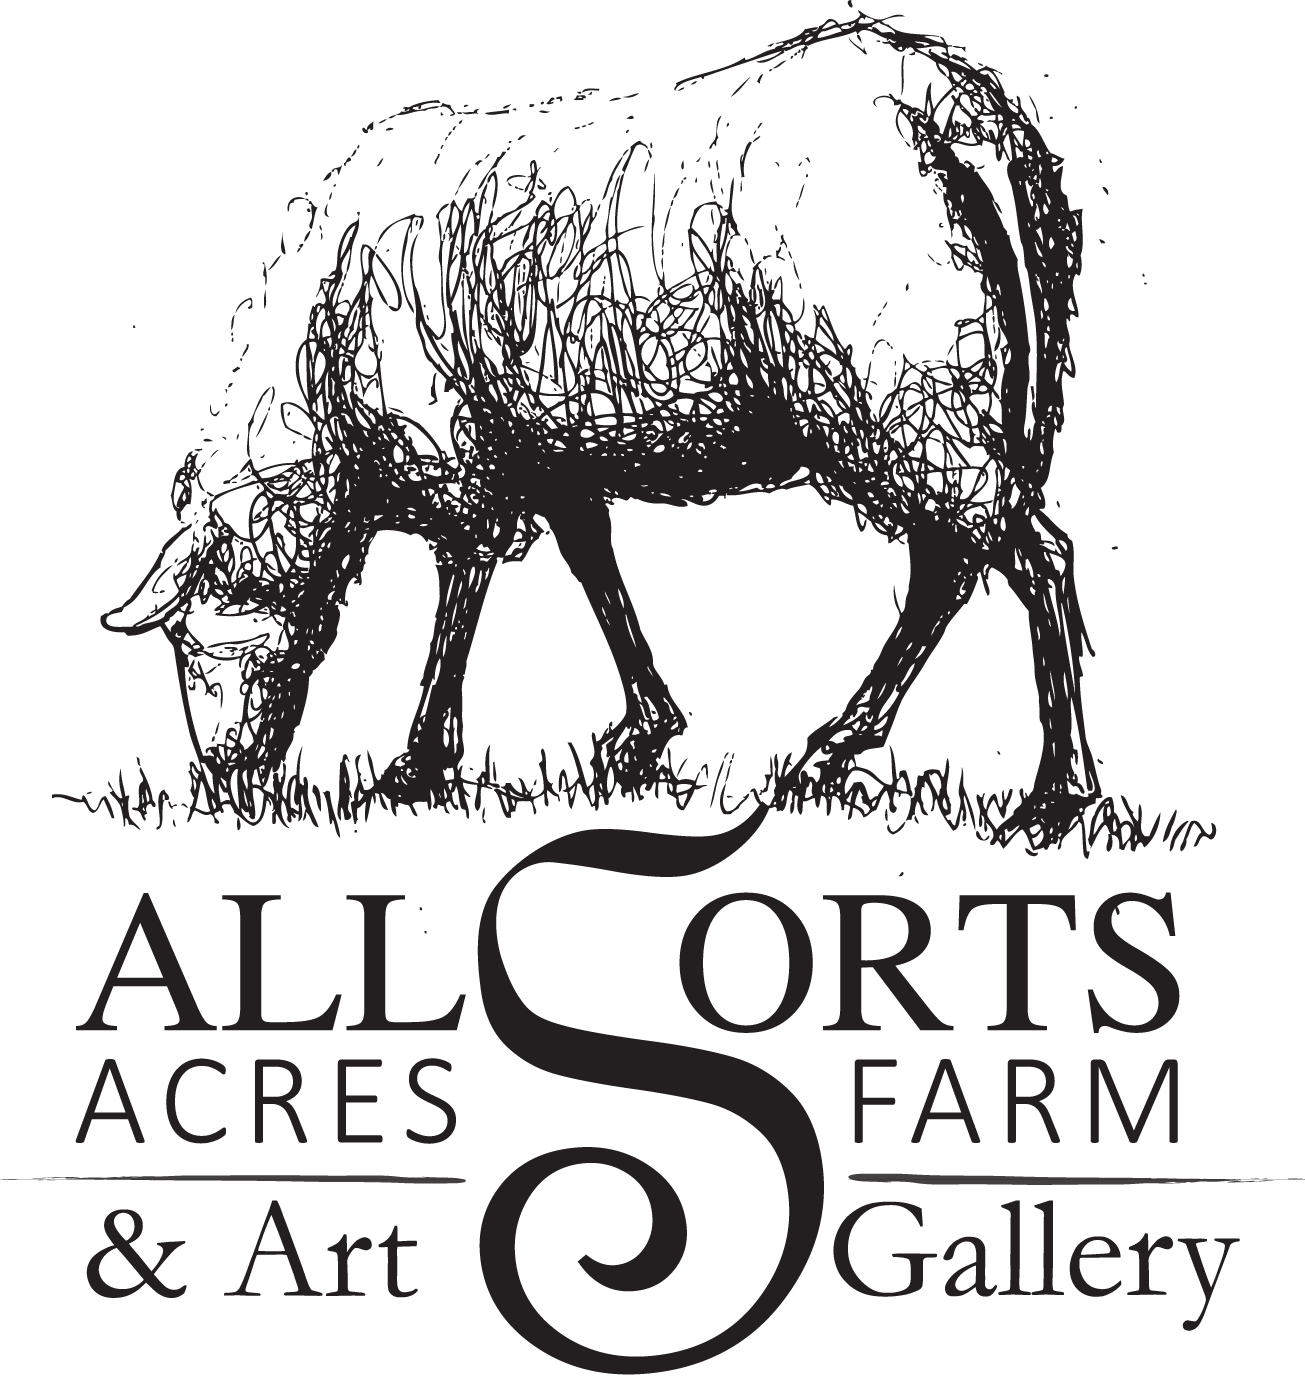 All Sorts Acres Farm